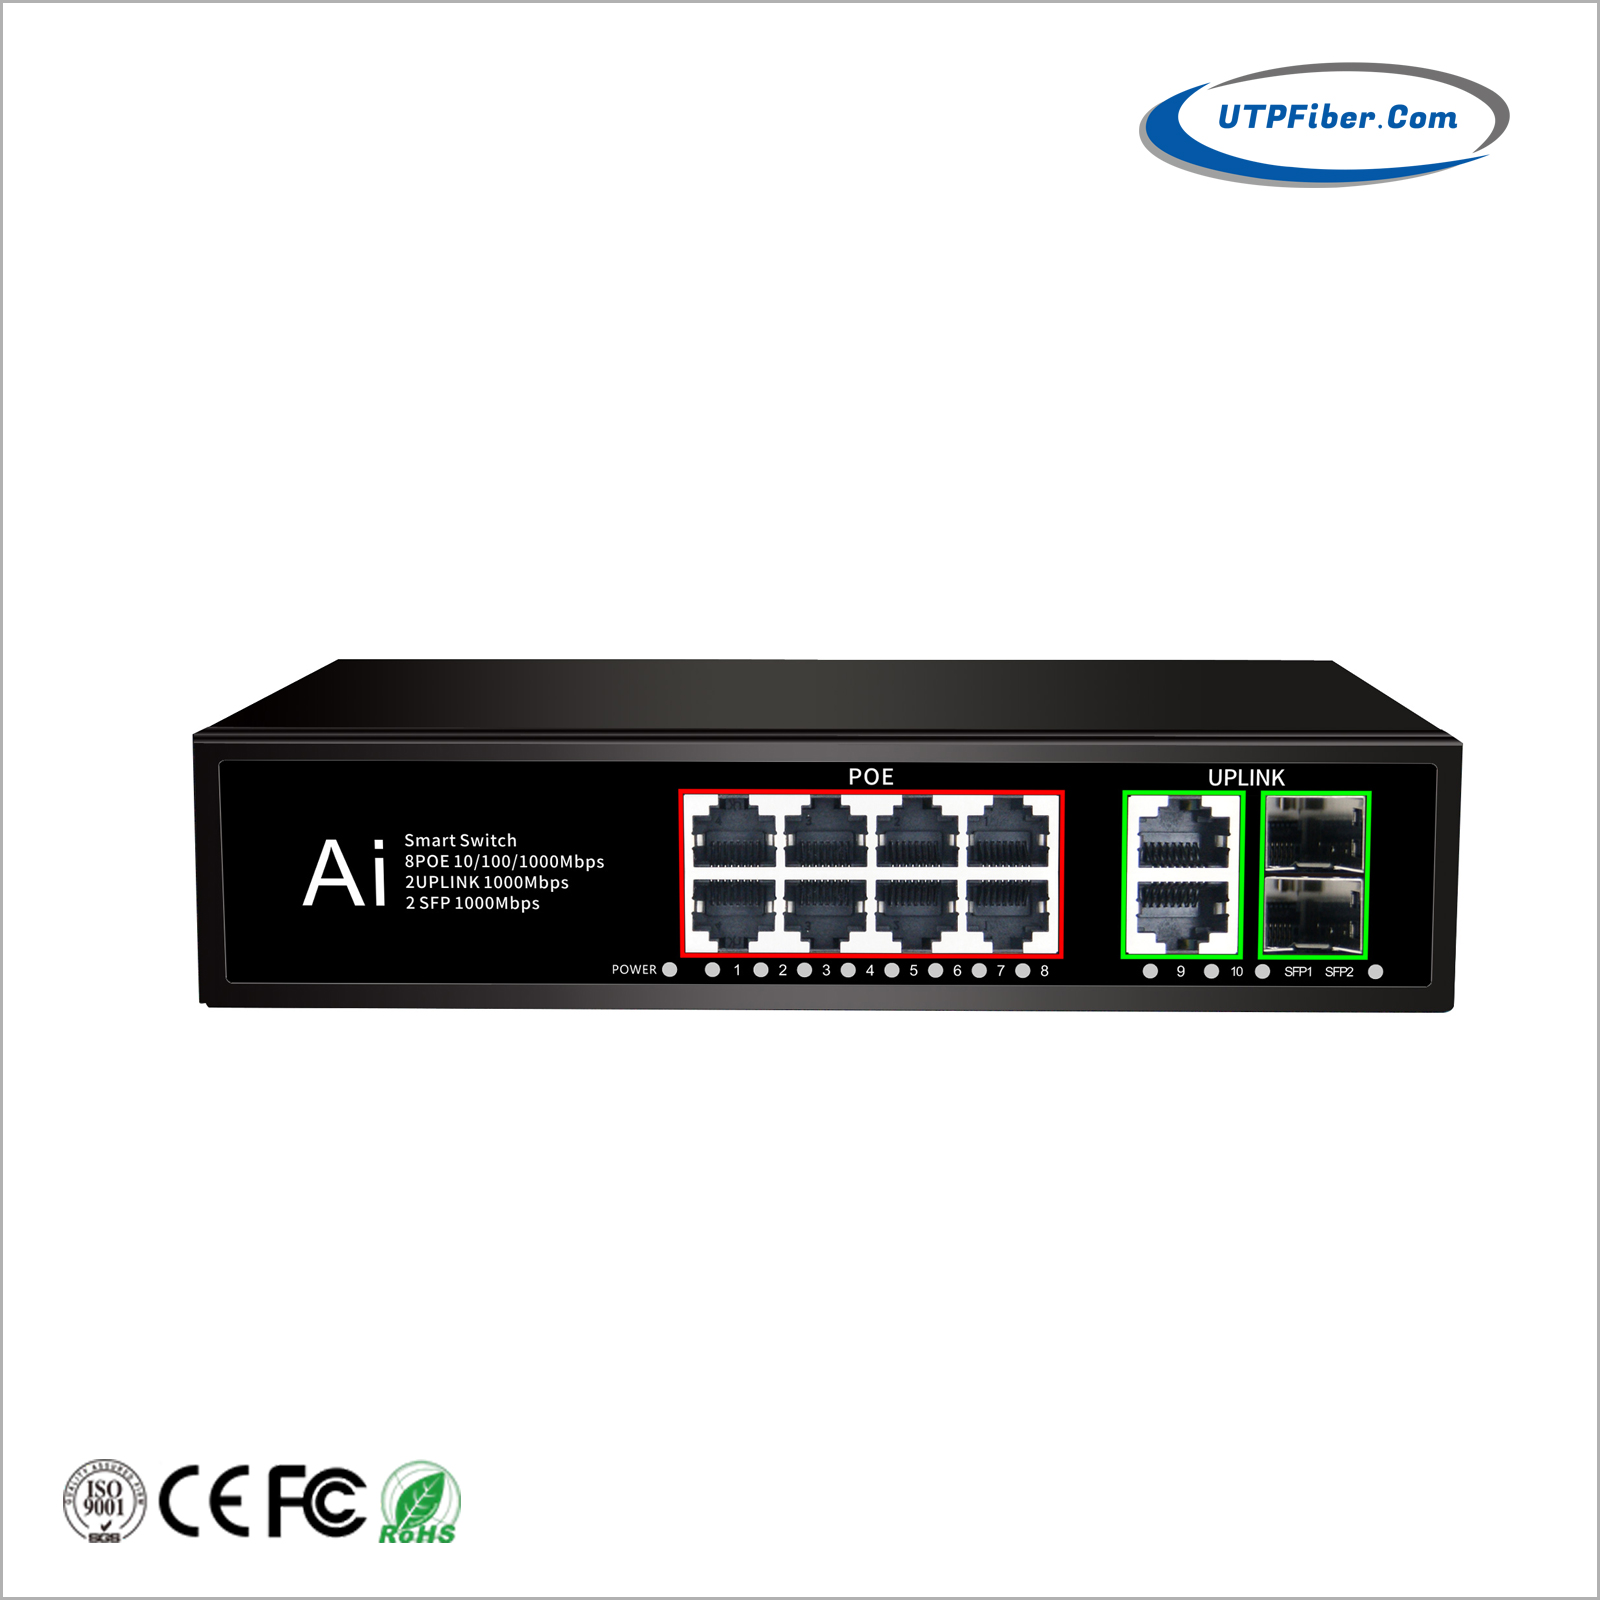 8-Port 10/100/1000T 802.3at PoE + 2-Port 10/100/1000T + 2-Port 1000X SFP Ethernet Switch